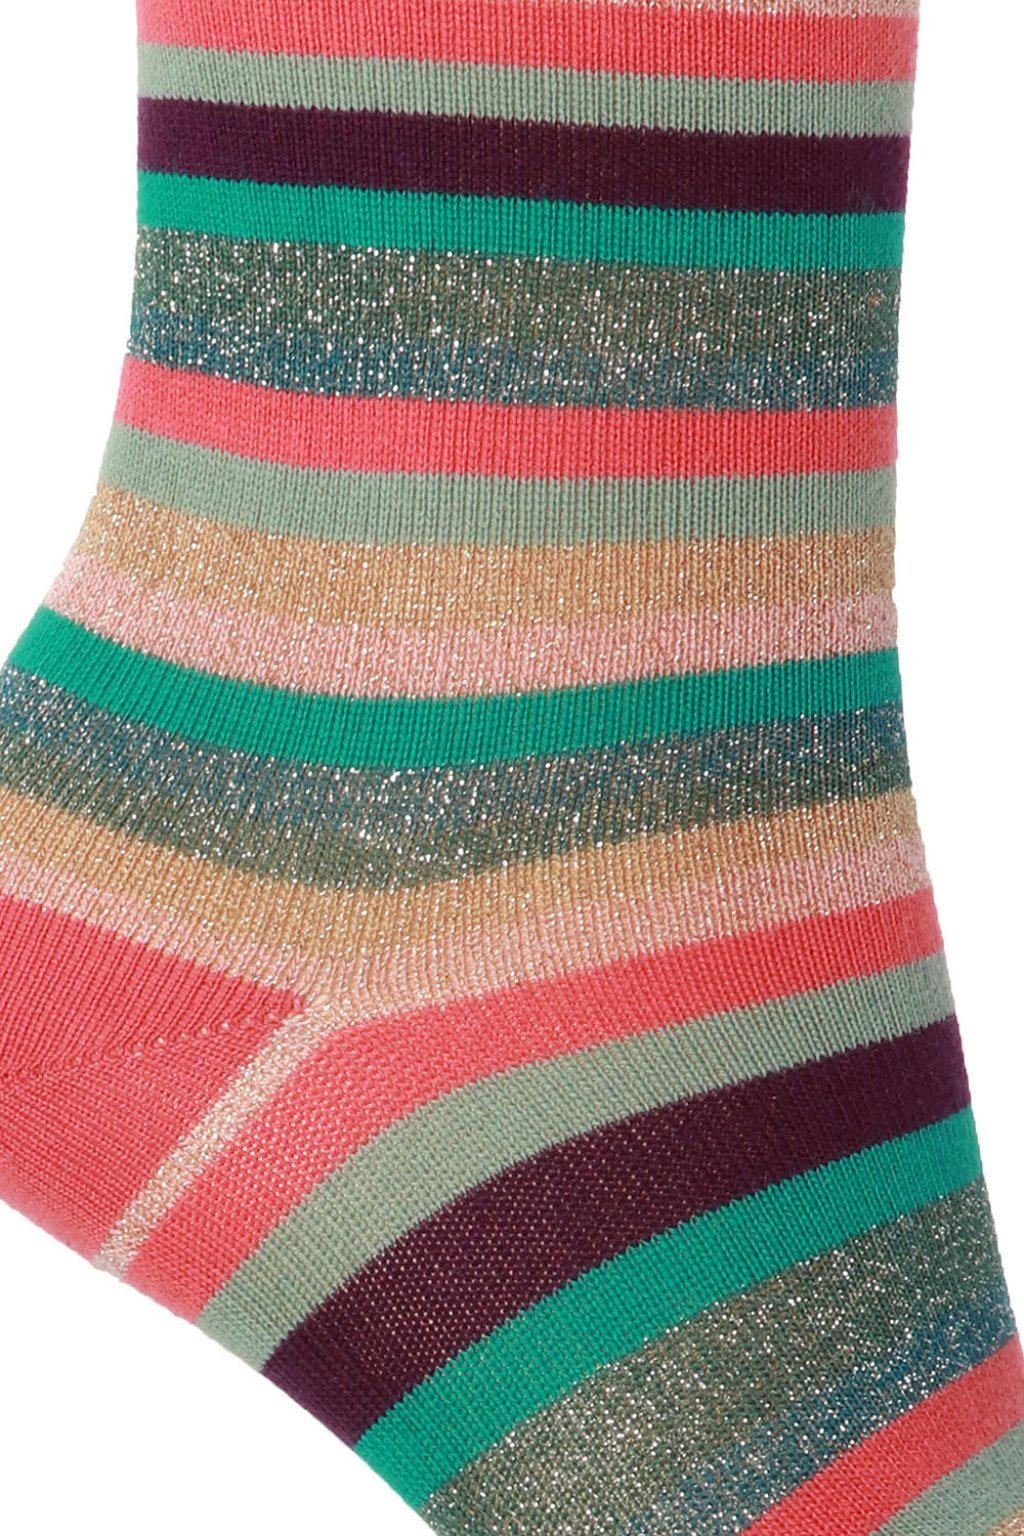 Paul Smith Striped socks